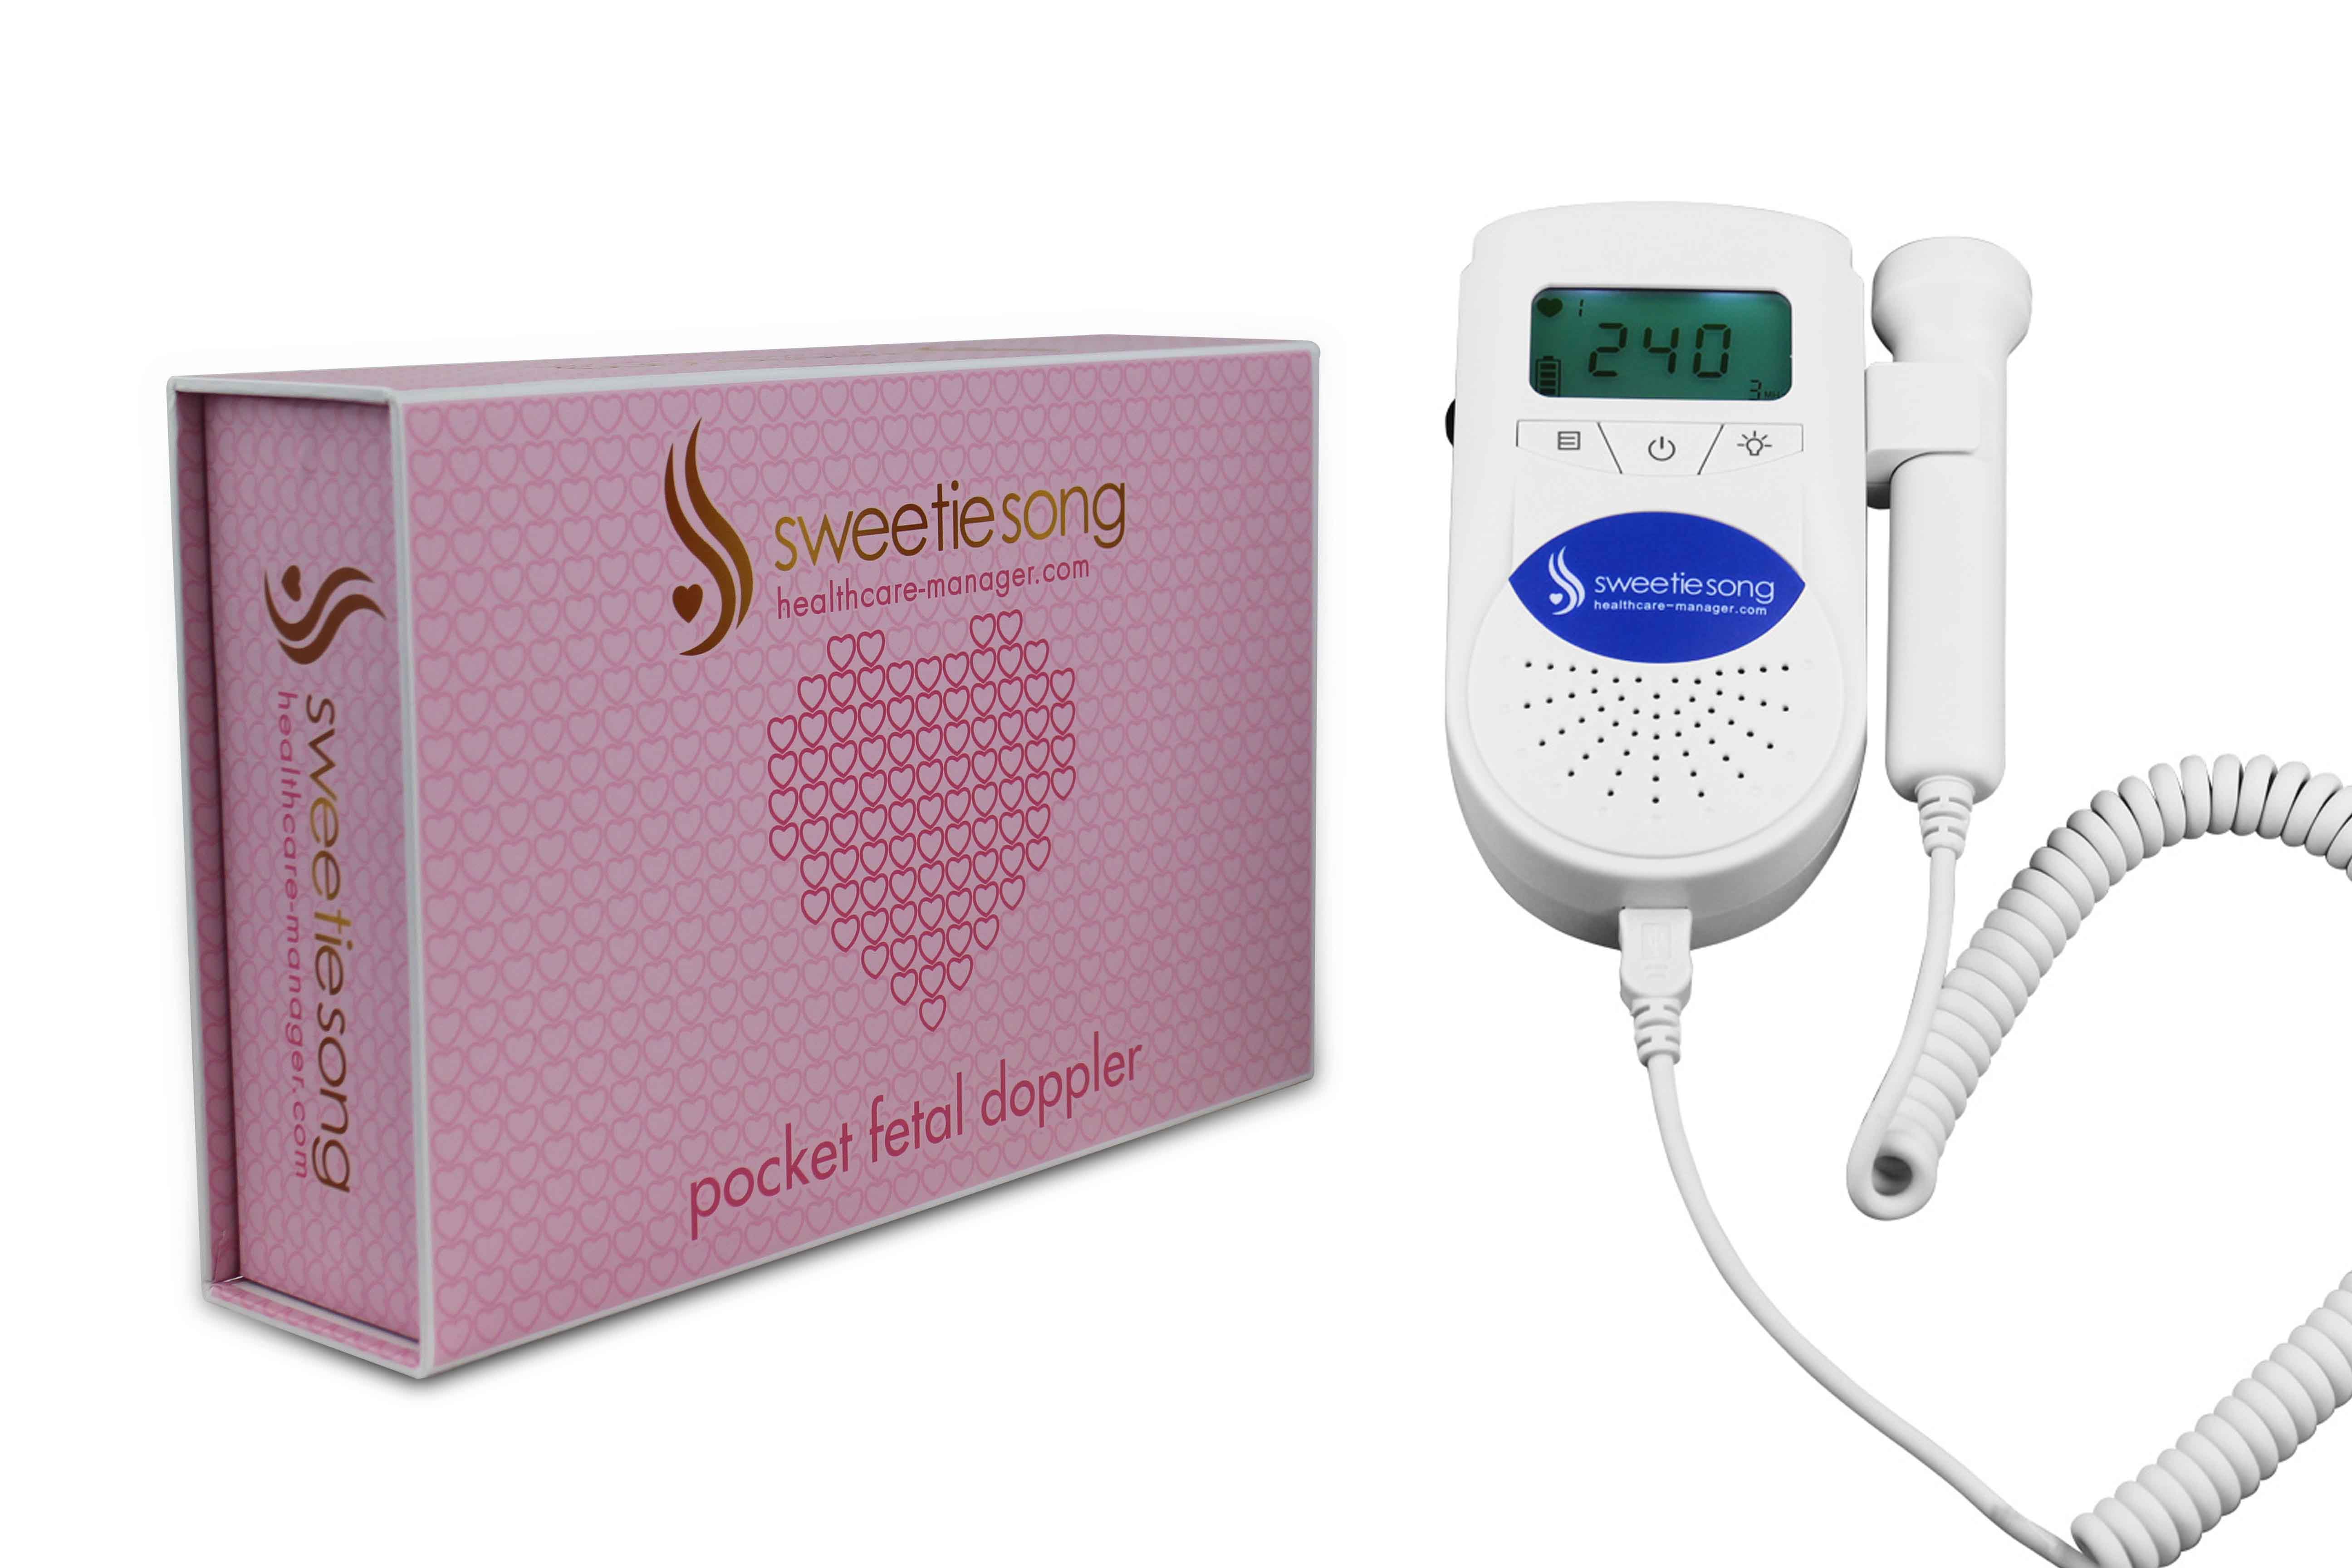 SweetieSong Pocket Fetal Doppler